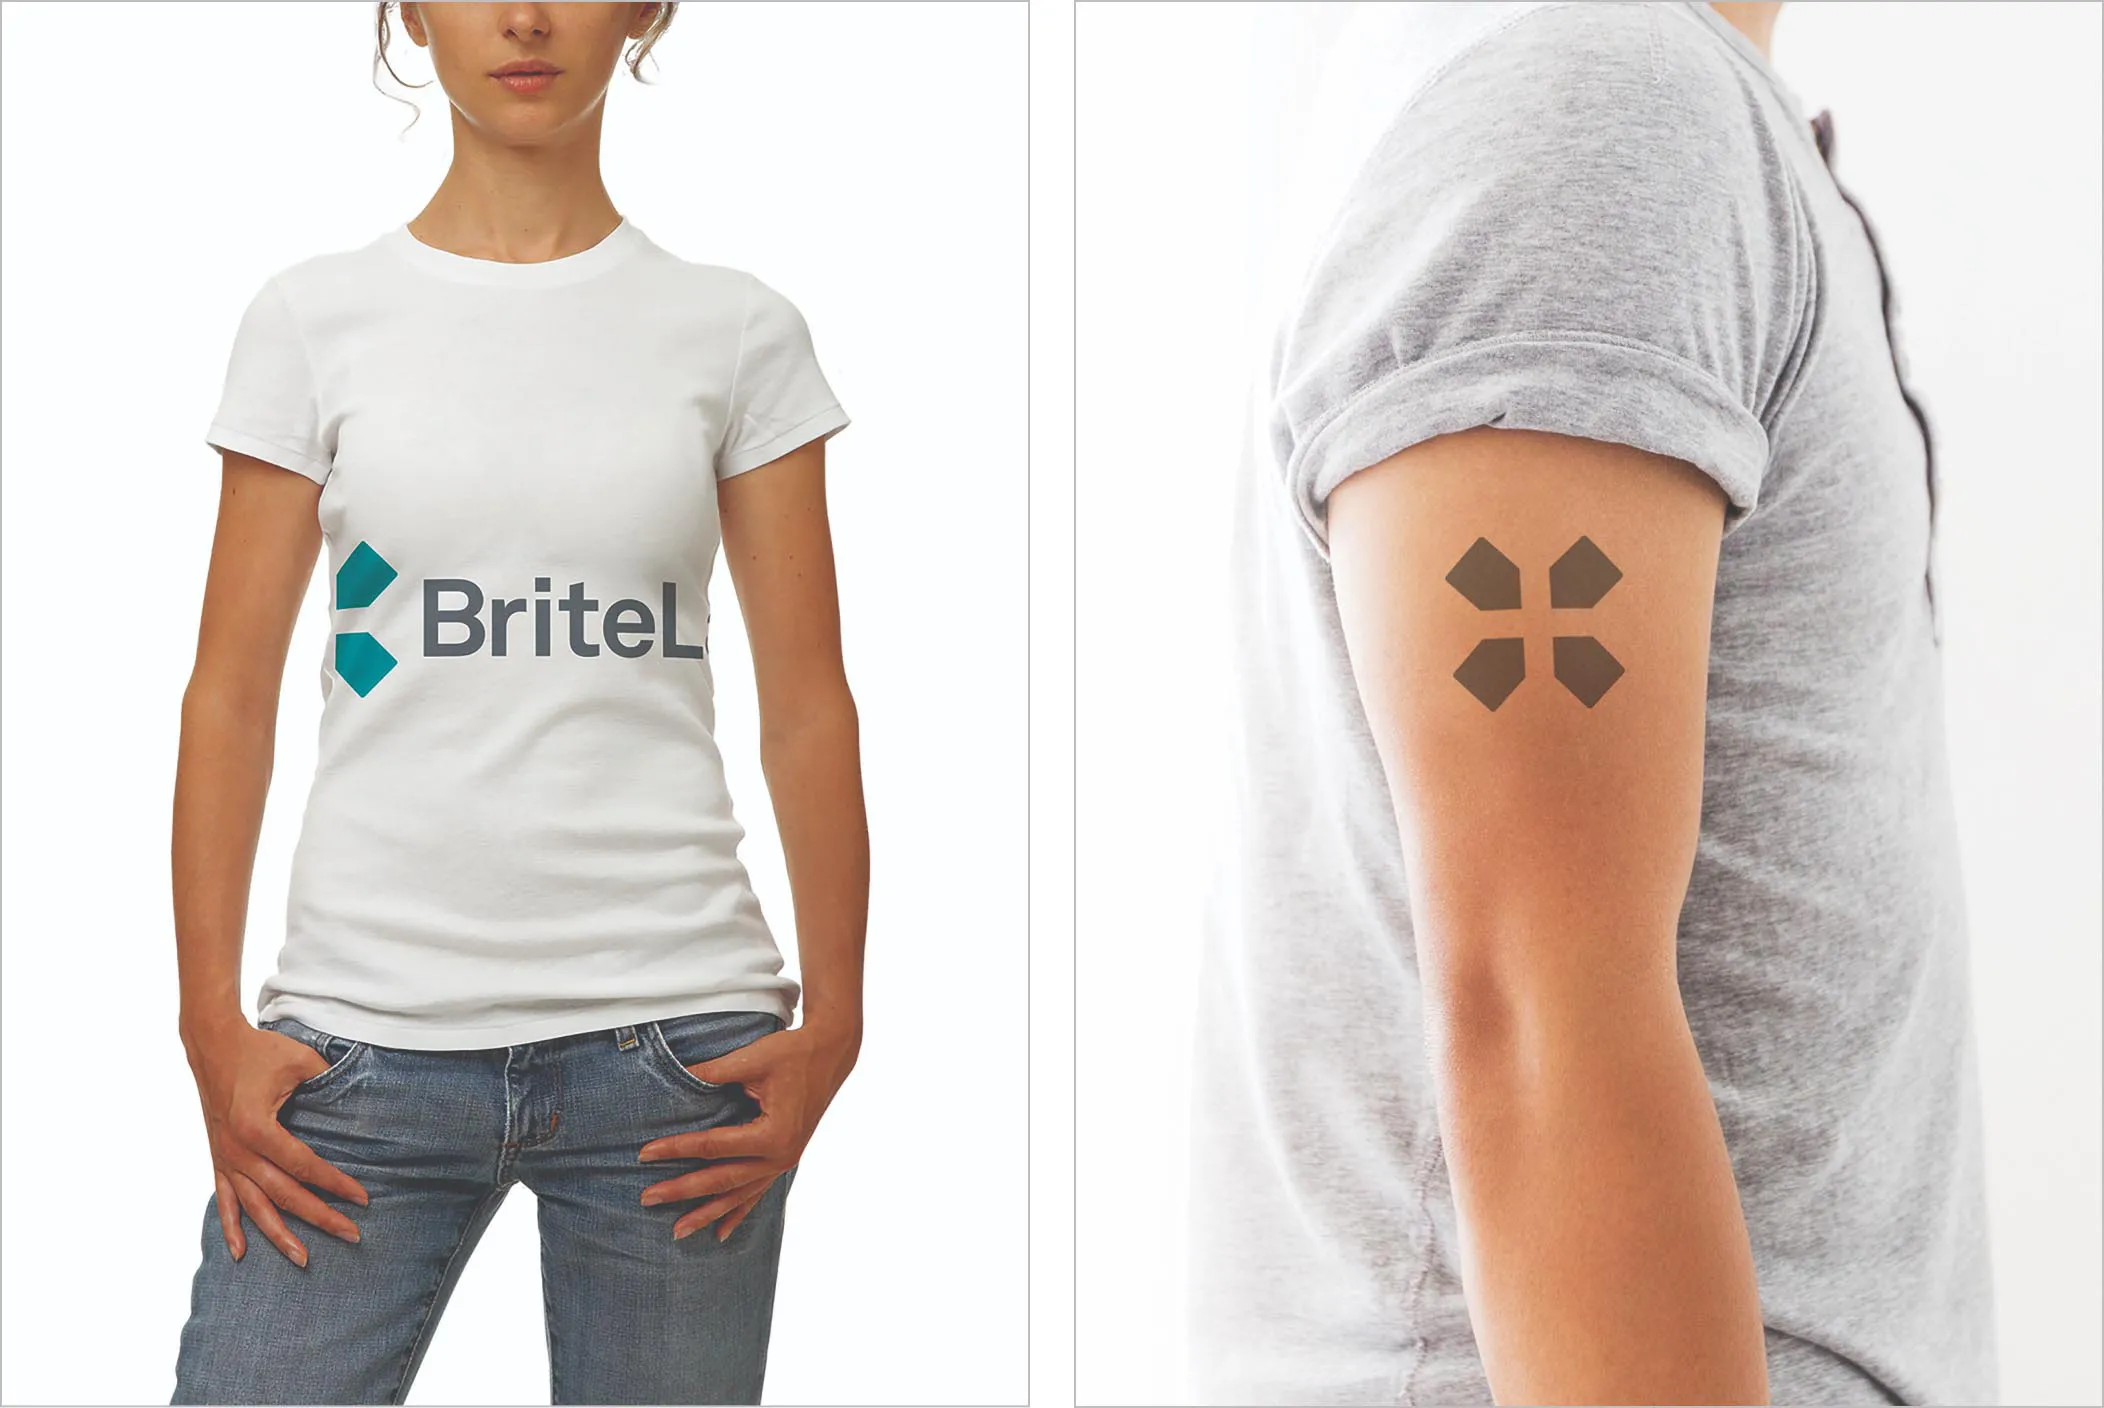 Image of BriteLab branded apparel